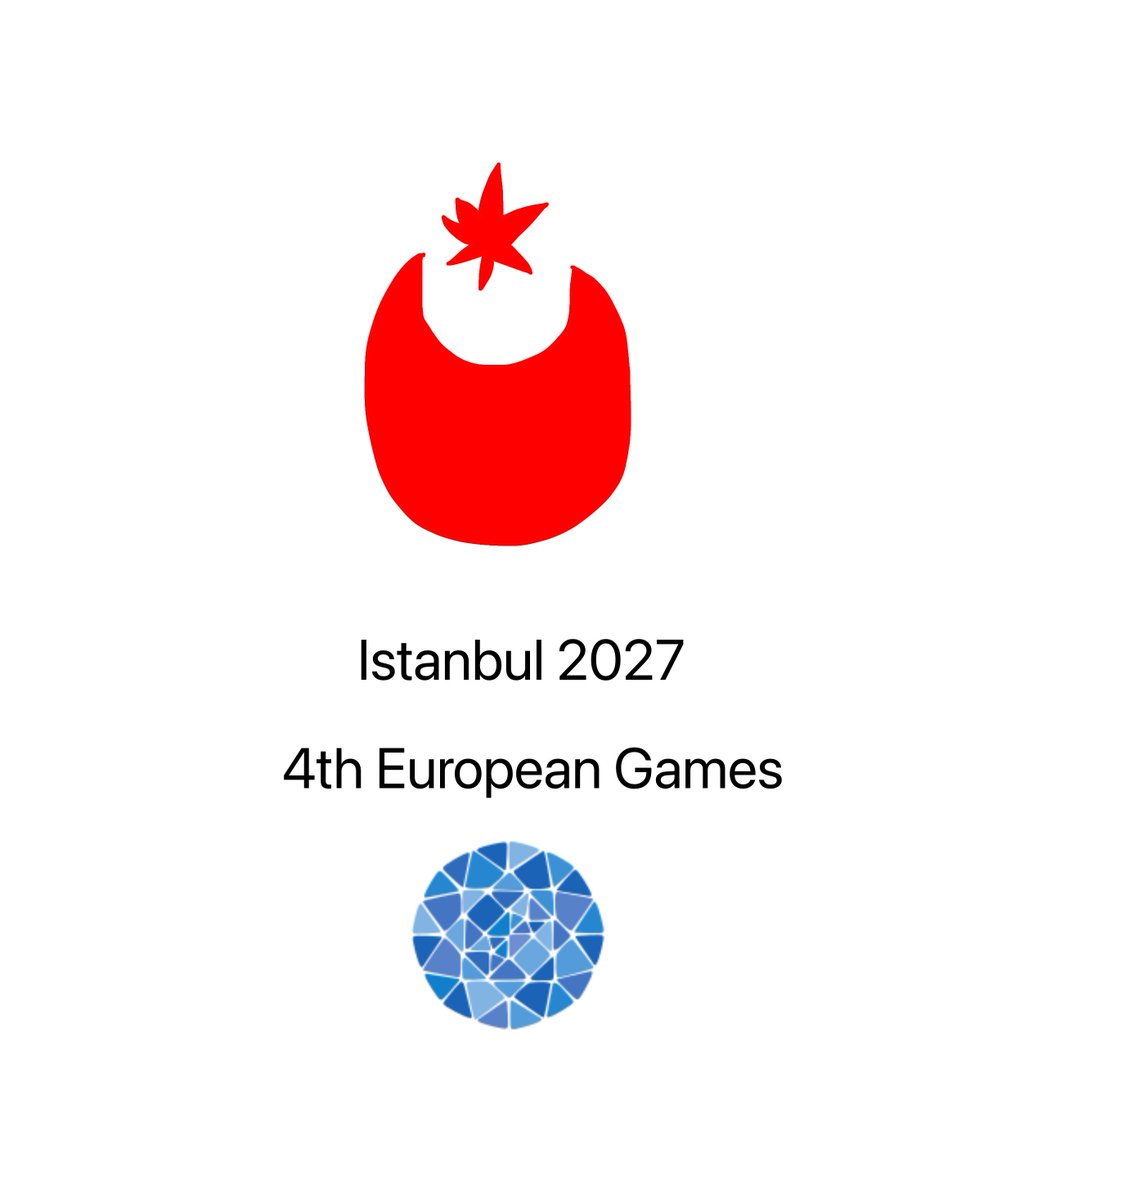 My 2027 European games Logo #Europeangames #Istanbul2027